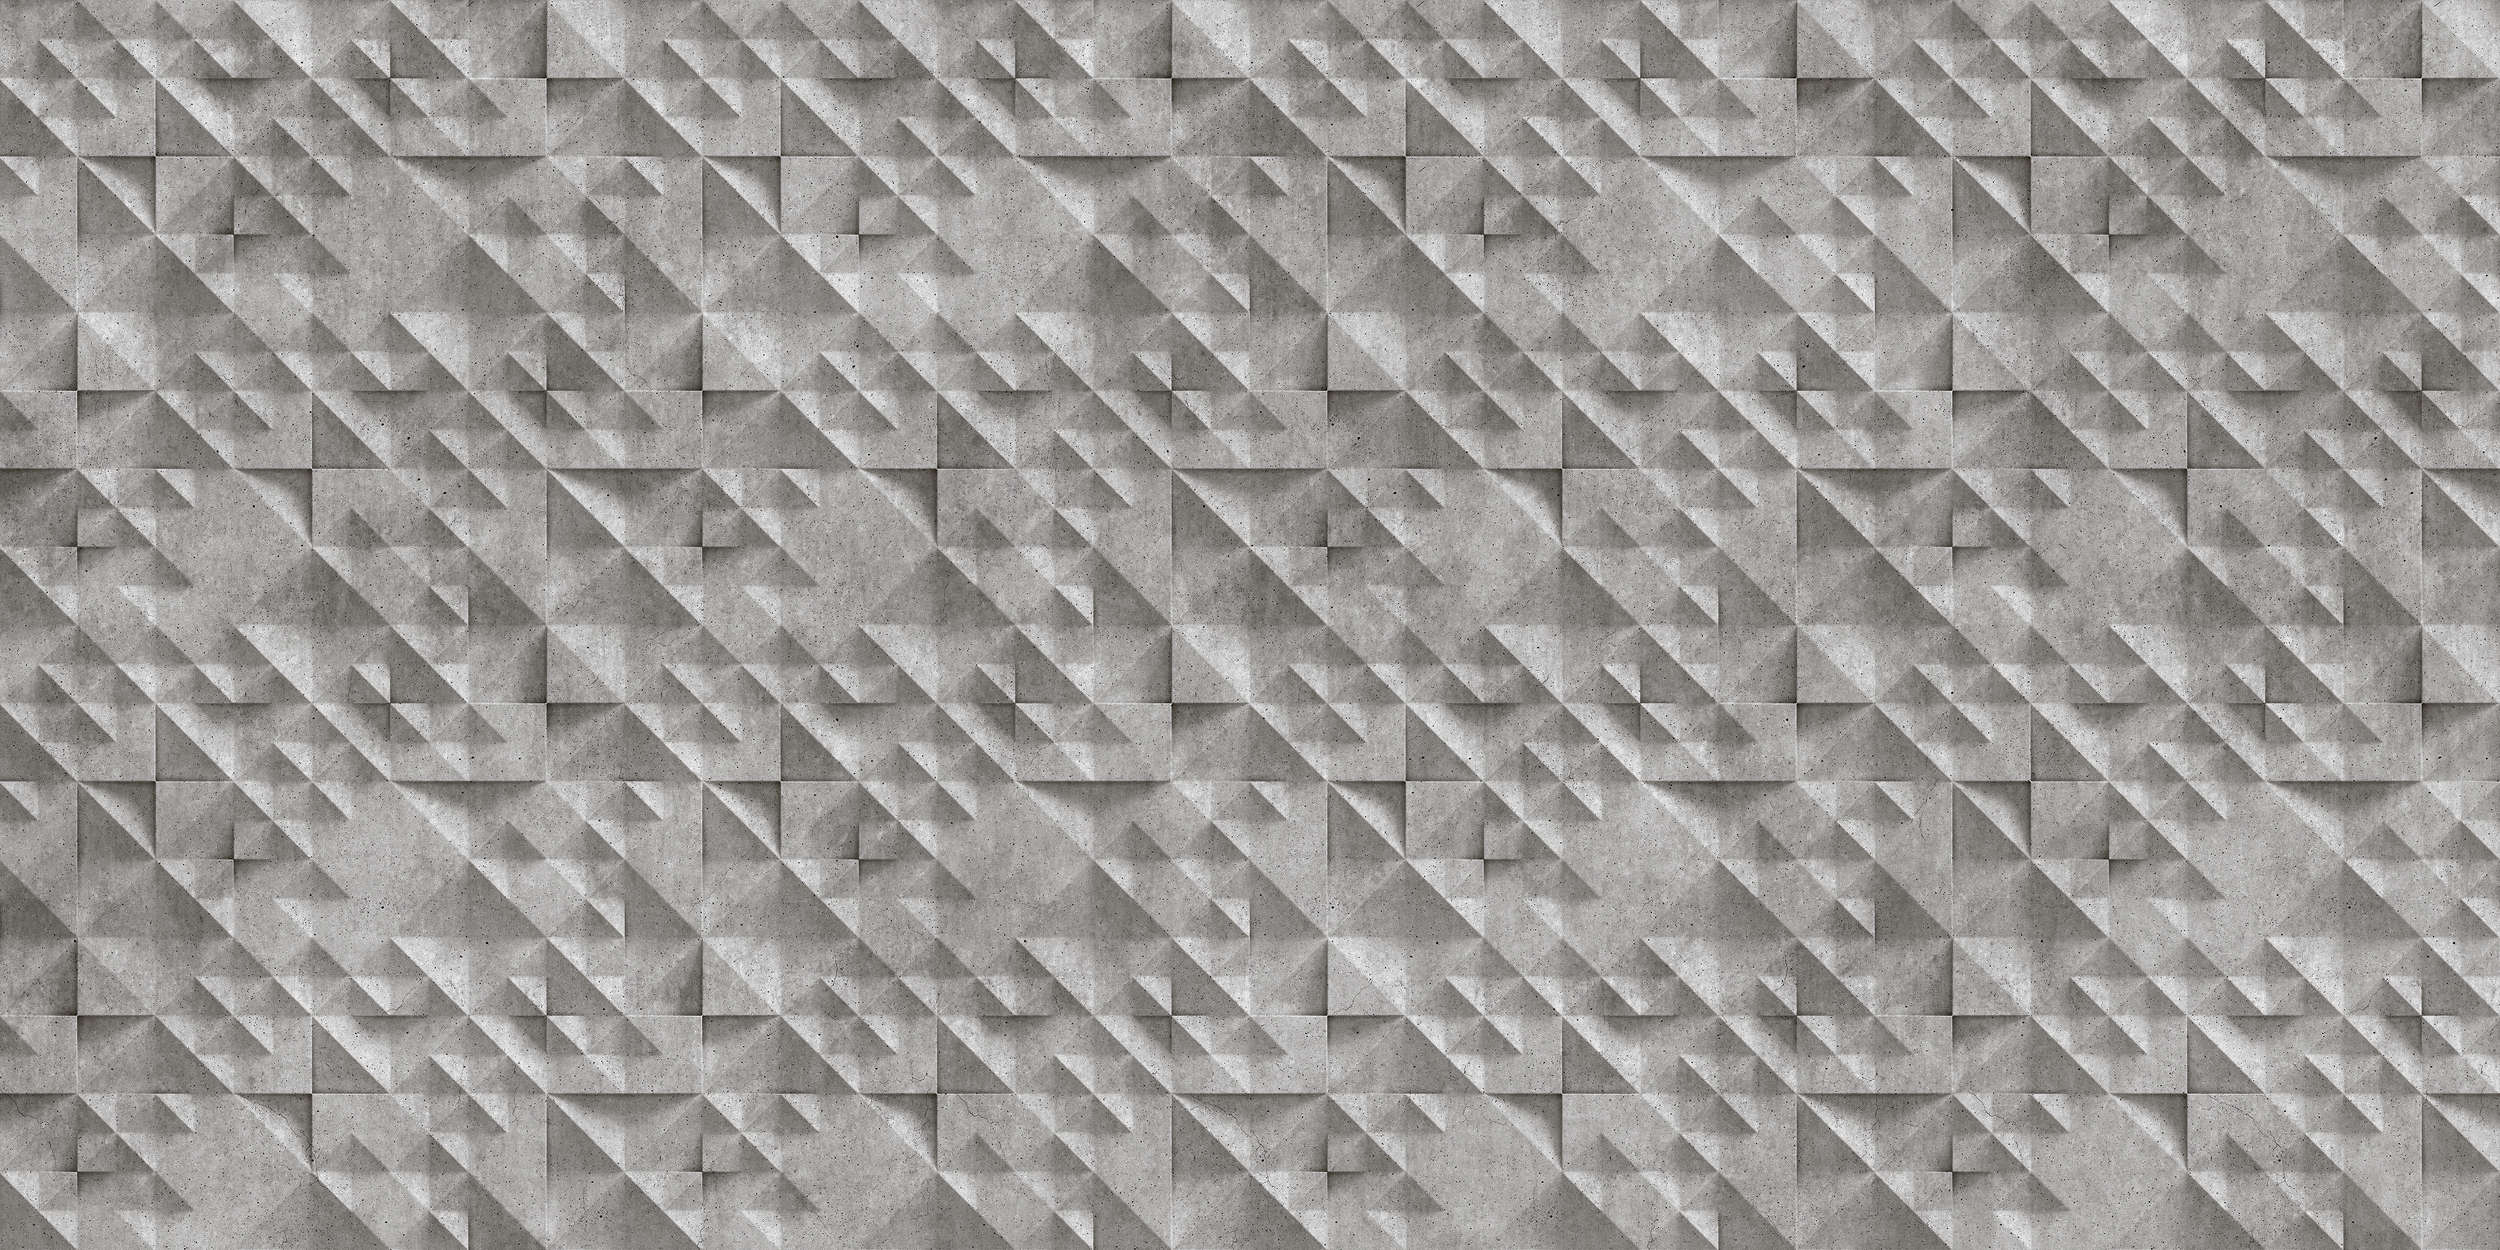             Concrete 2 - Coole 3D Beton-Rauten Fototapete – Grau, Schwarz | Premium Glattvlies
        